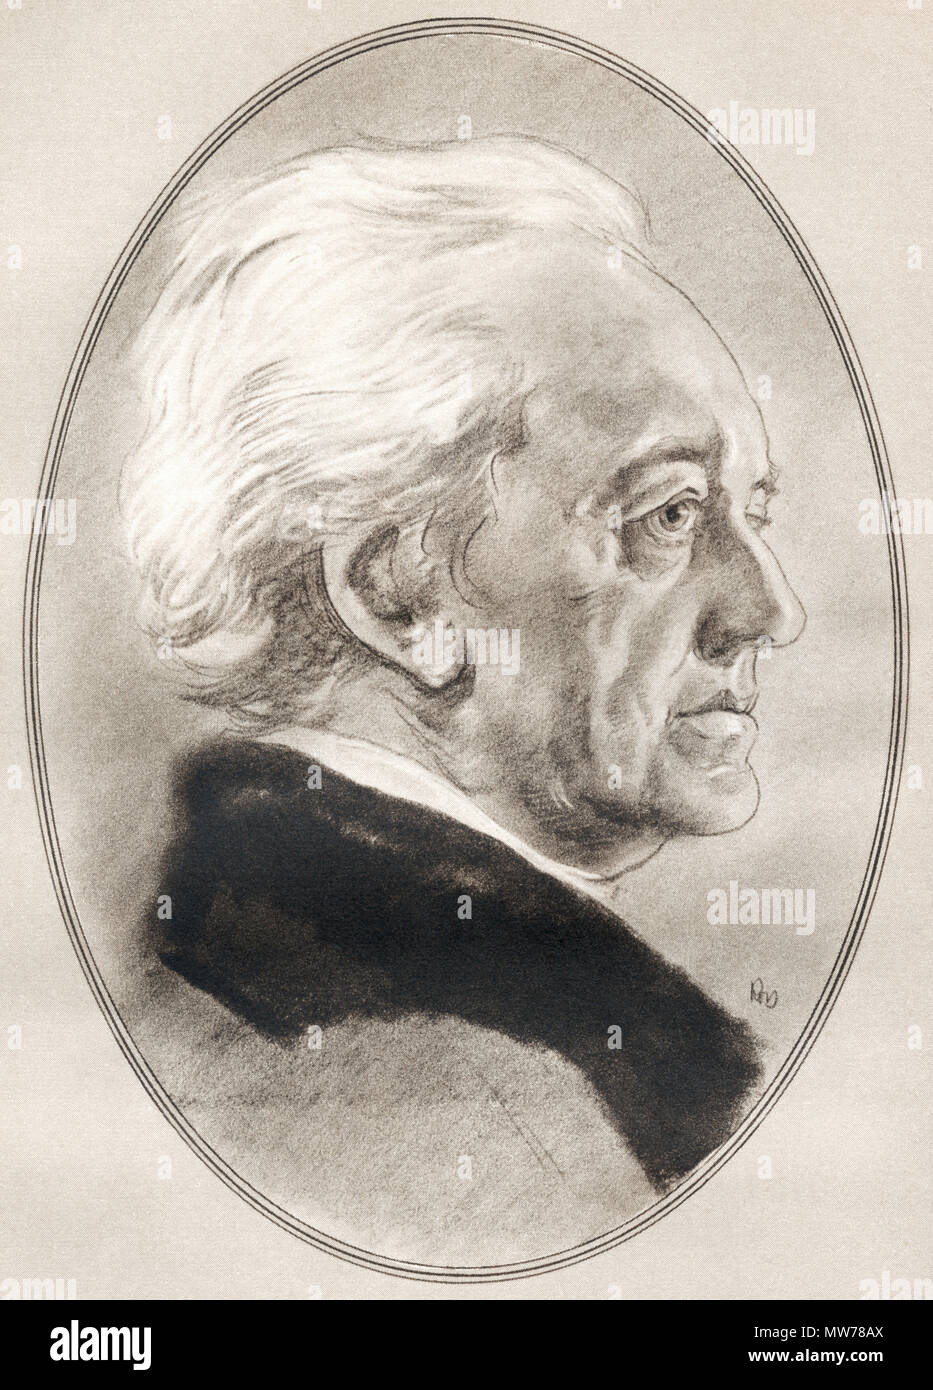 Johann Wolfgang von Goethe, 1749 – 1832.  German writer and statesman.  Illustration by Gordon Ross, American artist and illustrator (1873-1946), from Living Biographies of Famous Men. Stock Photo